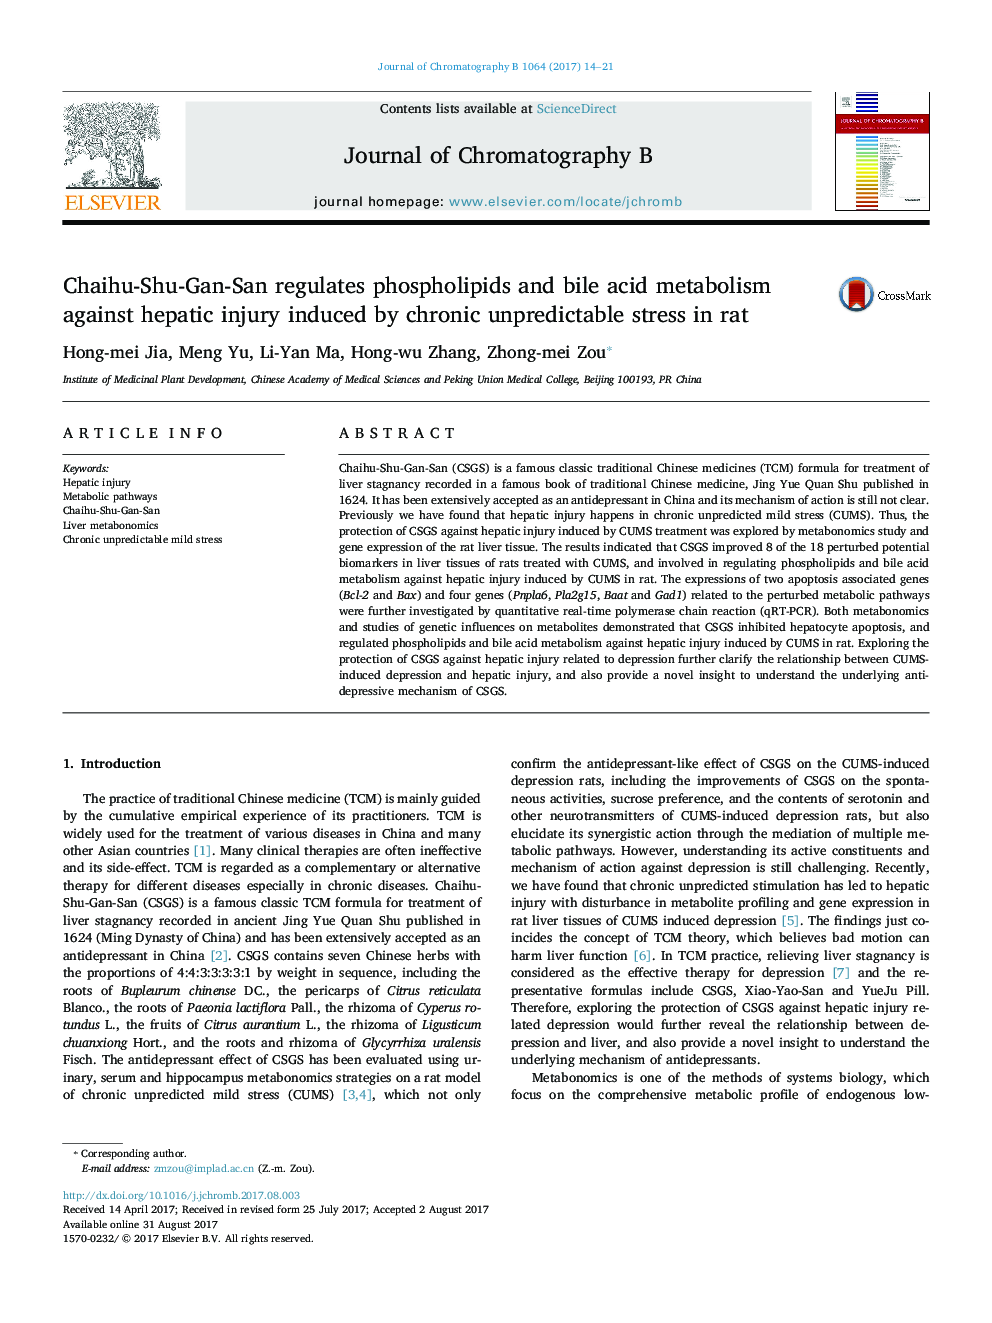 Chaihu-Shu-Gan-San regulates phospholipids and bile acid metabolism against hepatic injury induced by chronic unpredictable stress in rat